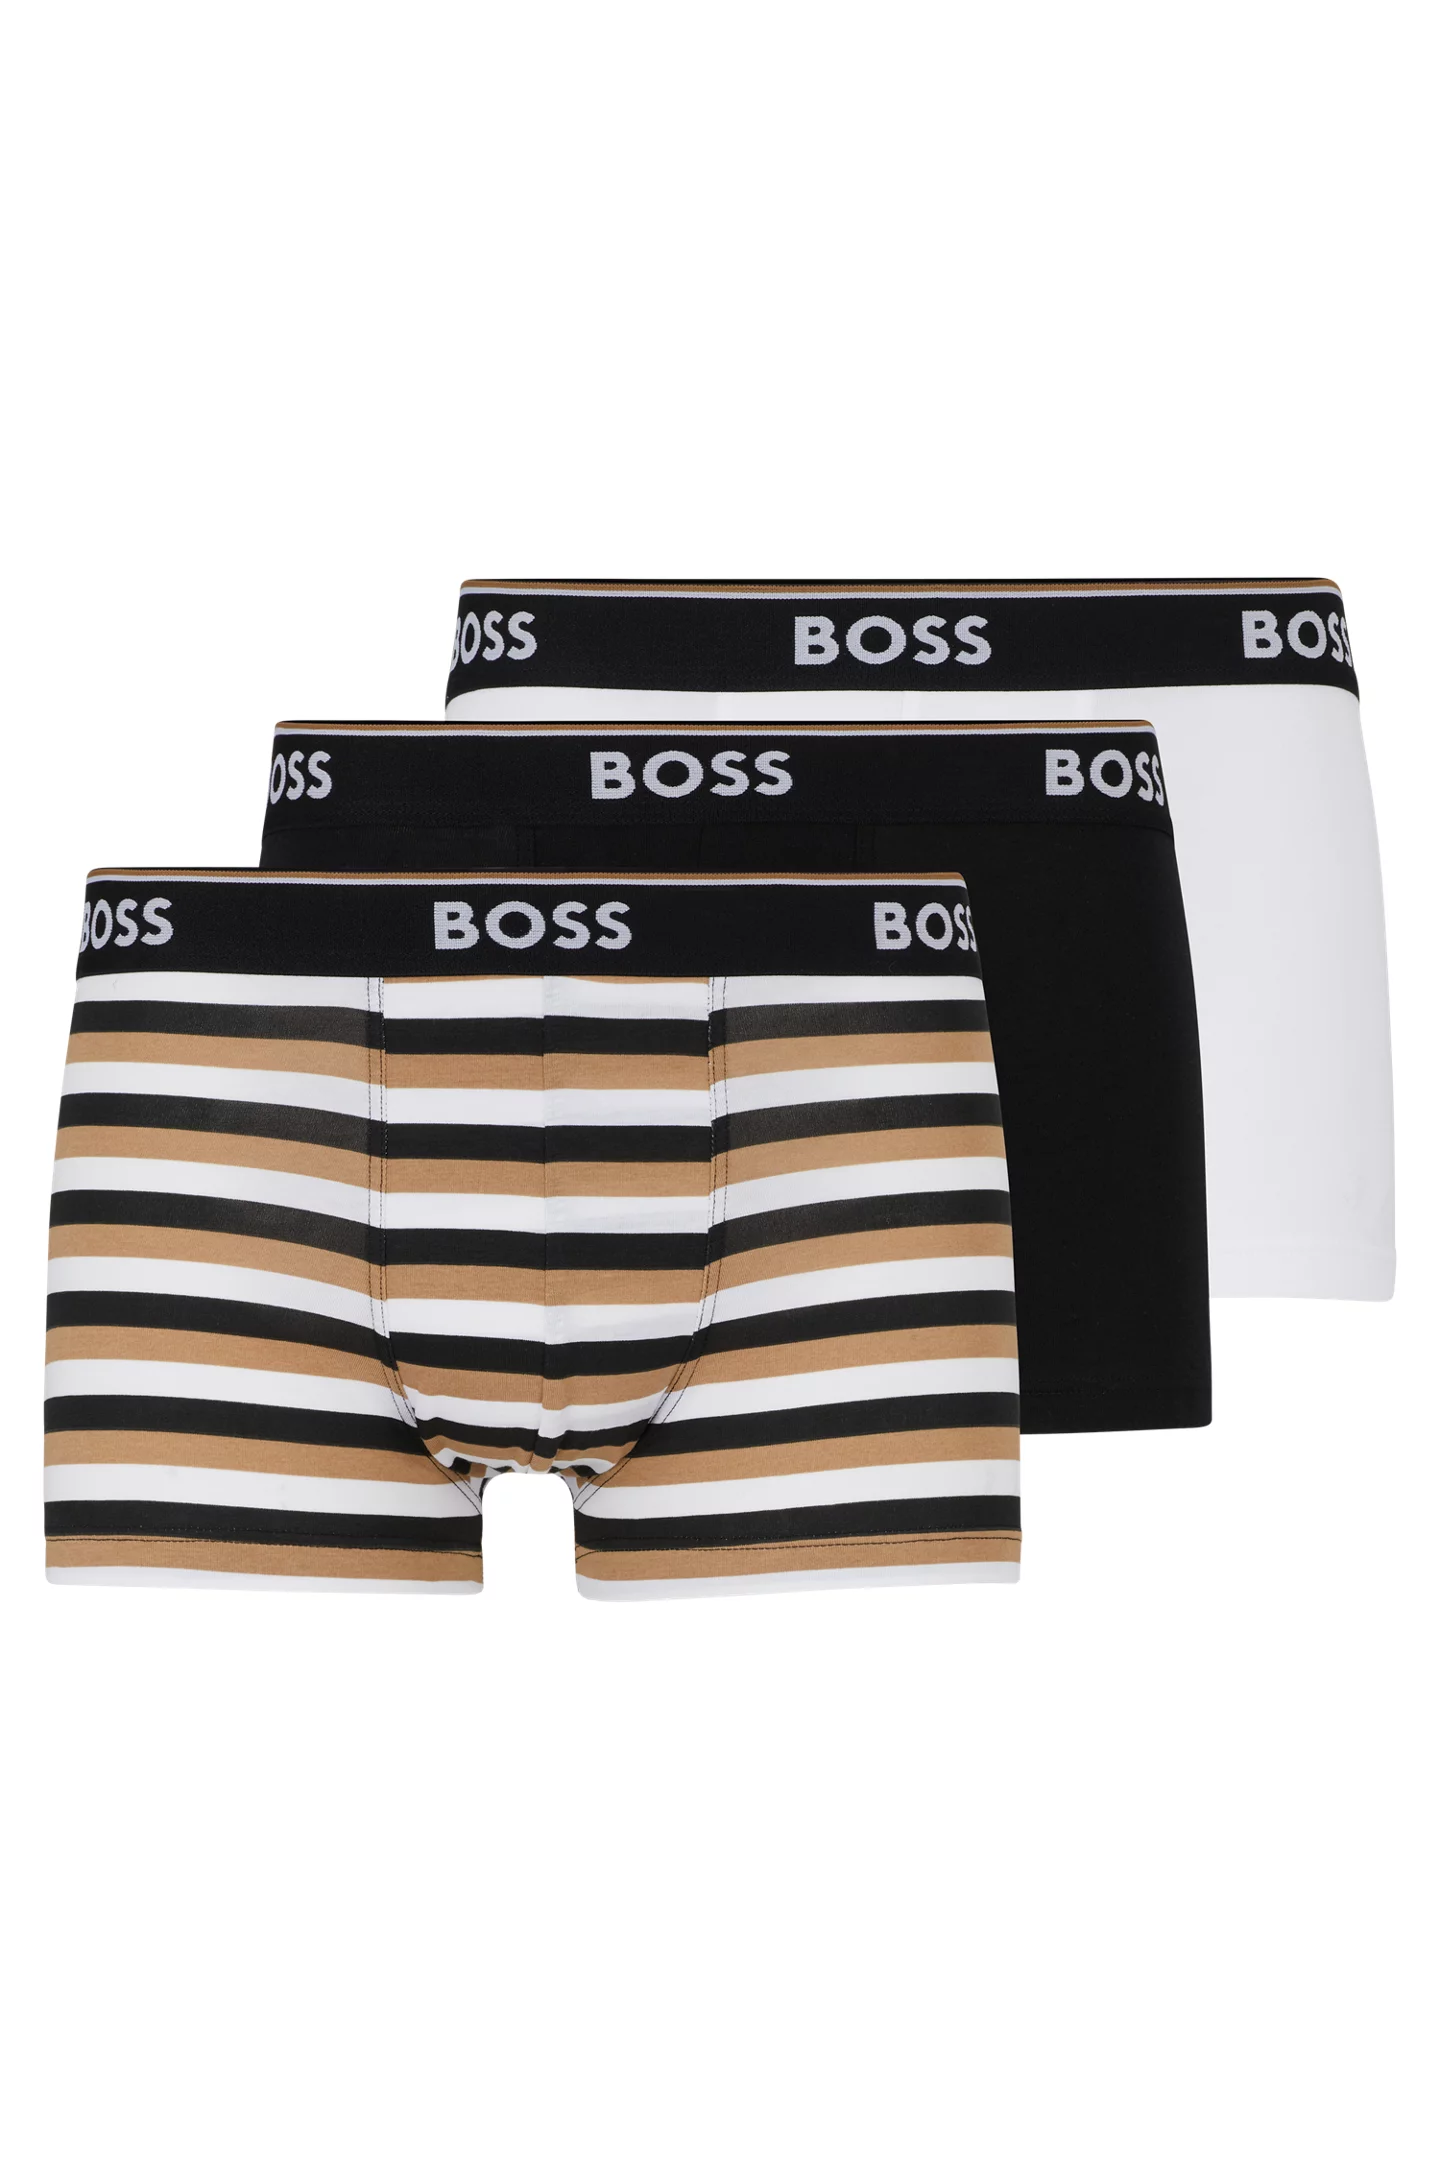 Boss Pack of 3 White and Black Stripe Boxers Trunks